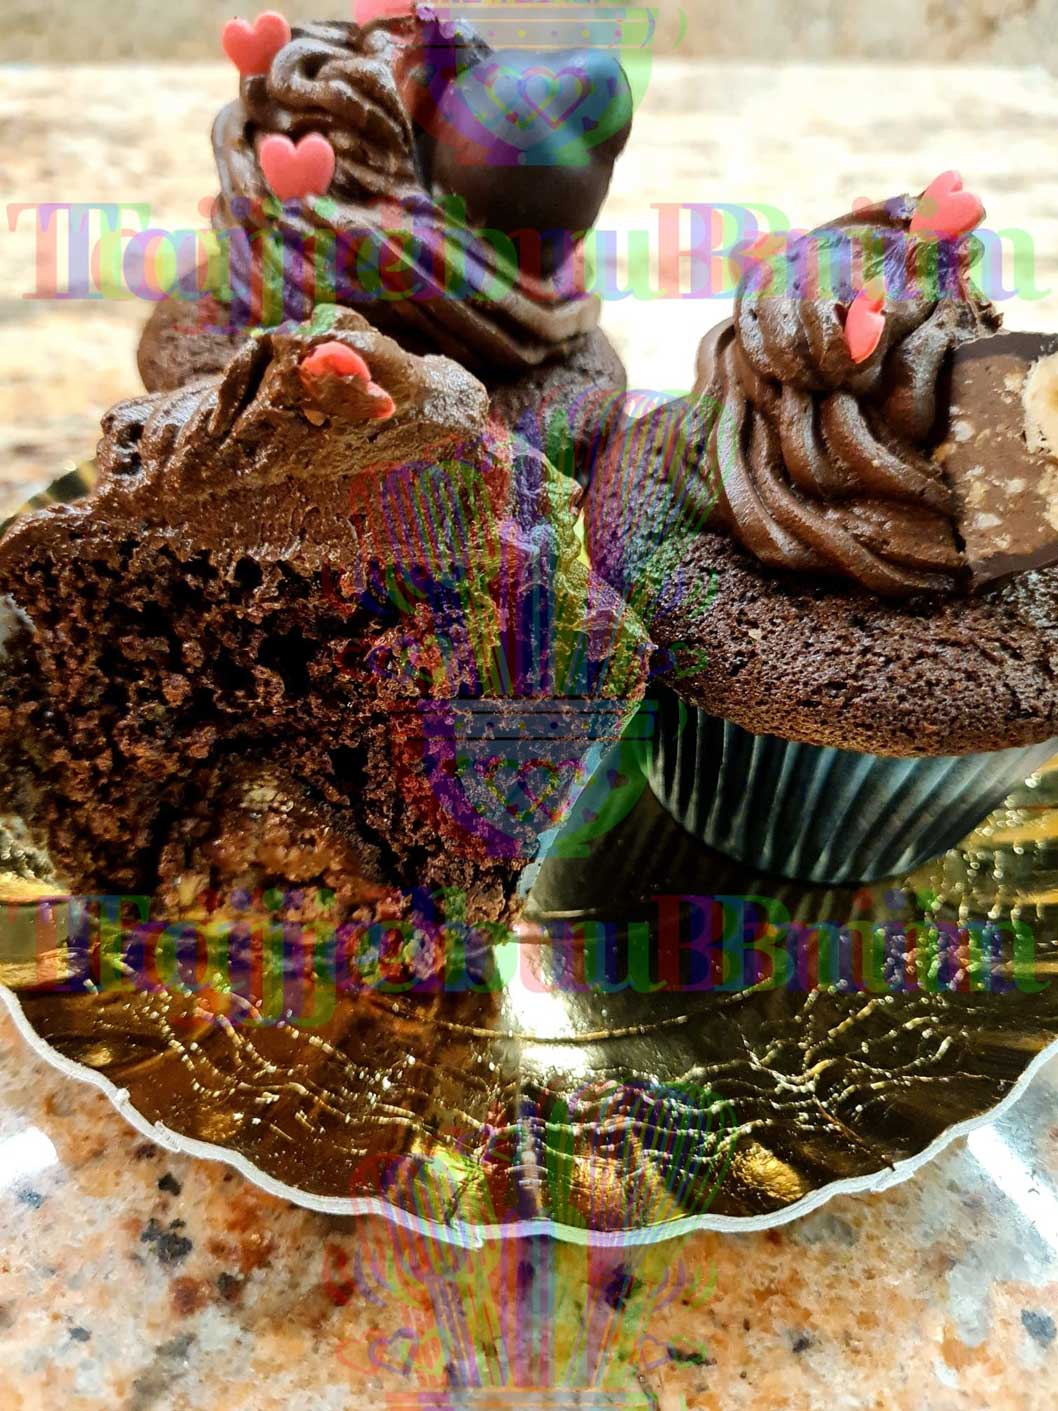 Enlarged image of prepared Baci cupcakes